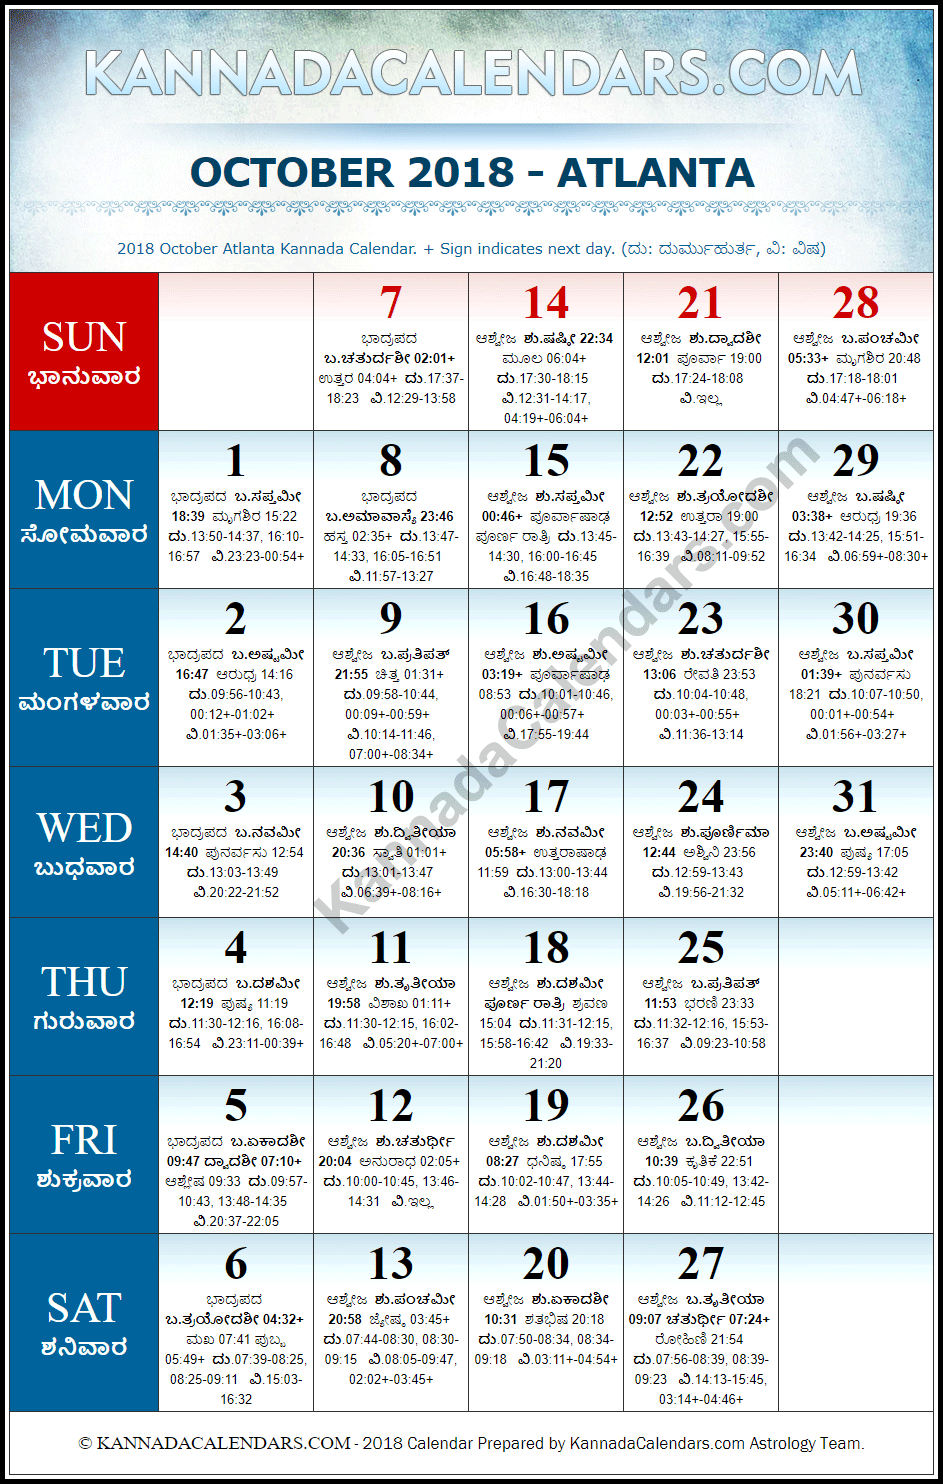 October 2018 Kannada Calendar for Atlanta, USA